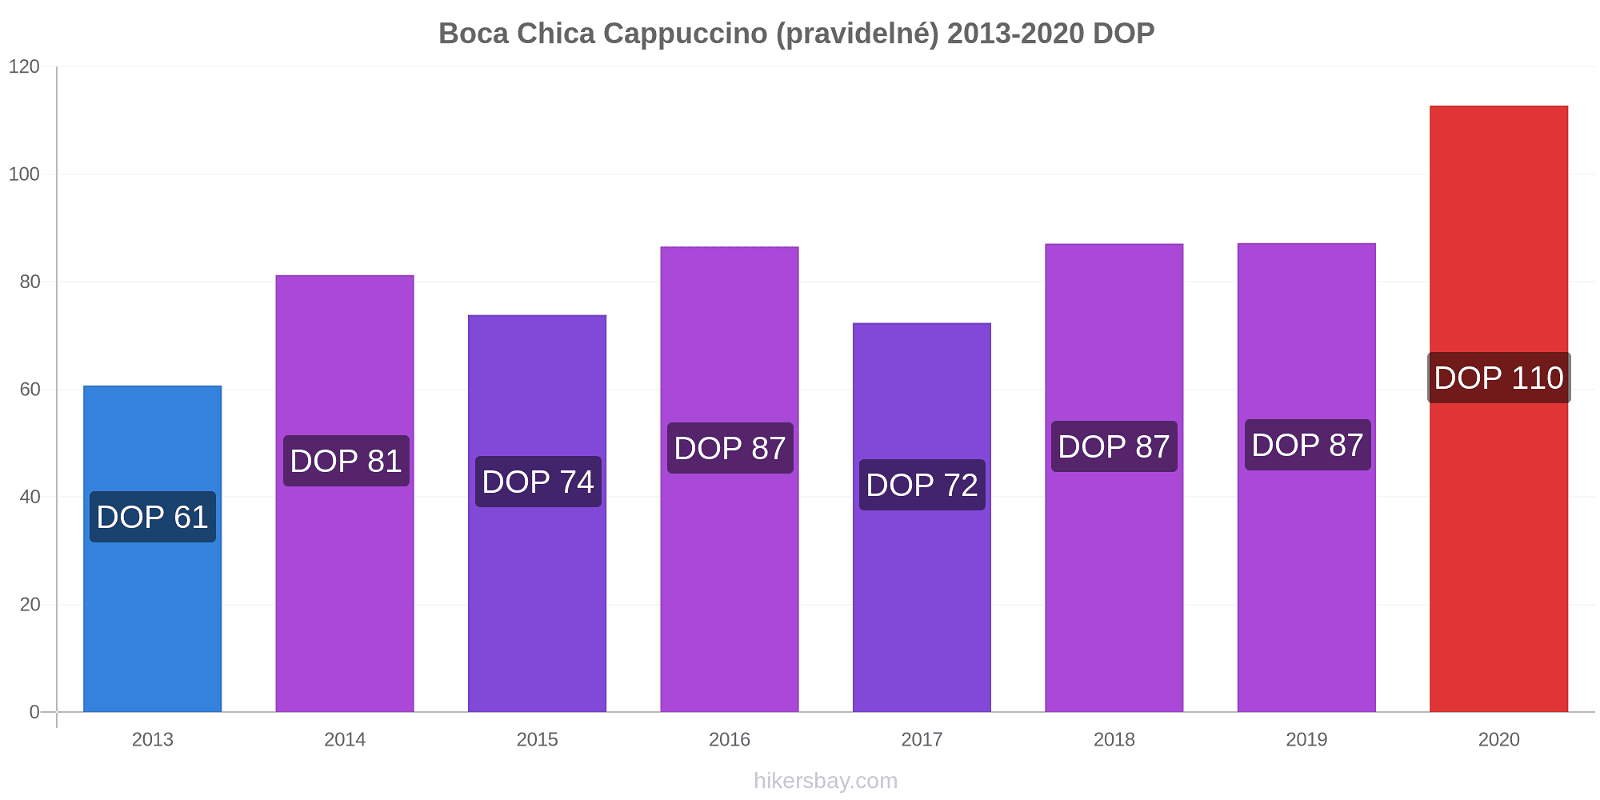 Boca Chica změny cen Cappuccino (pravidelné) hikersbay.com